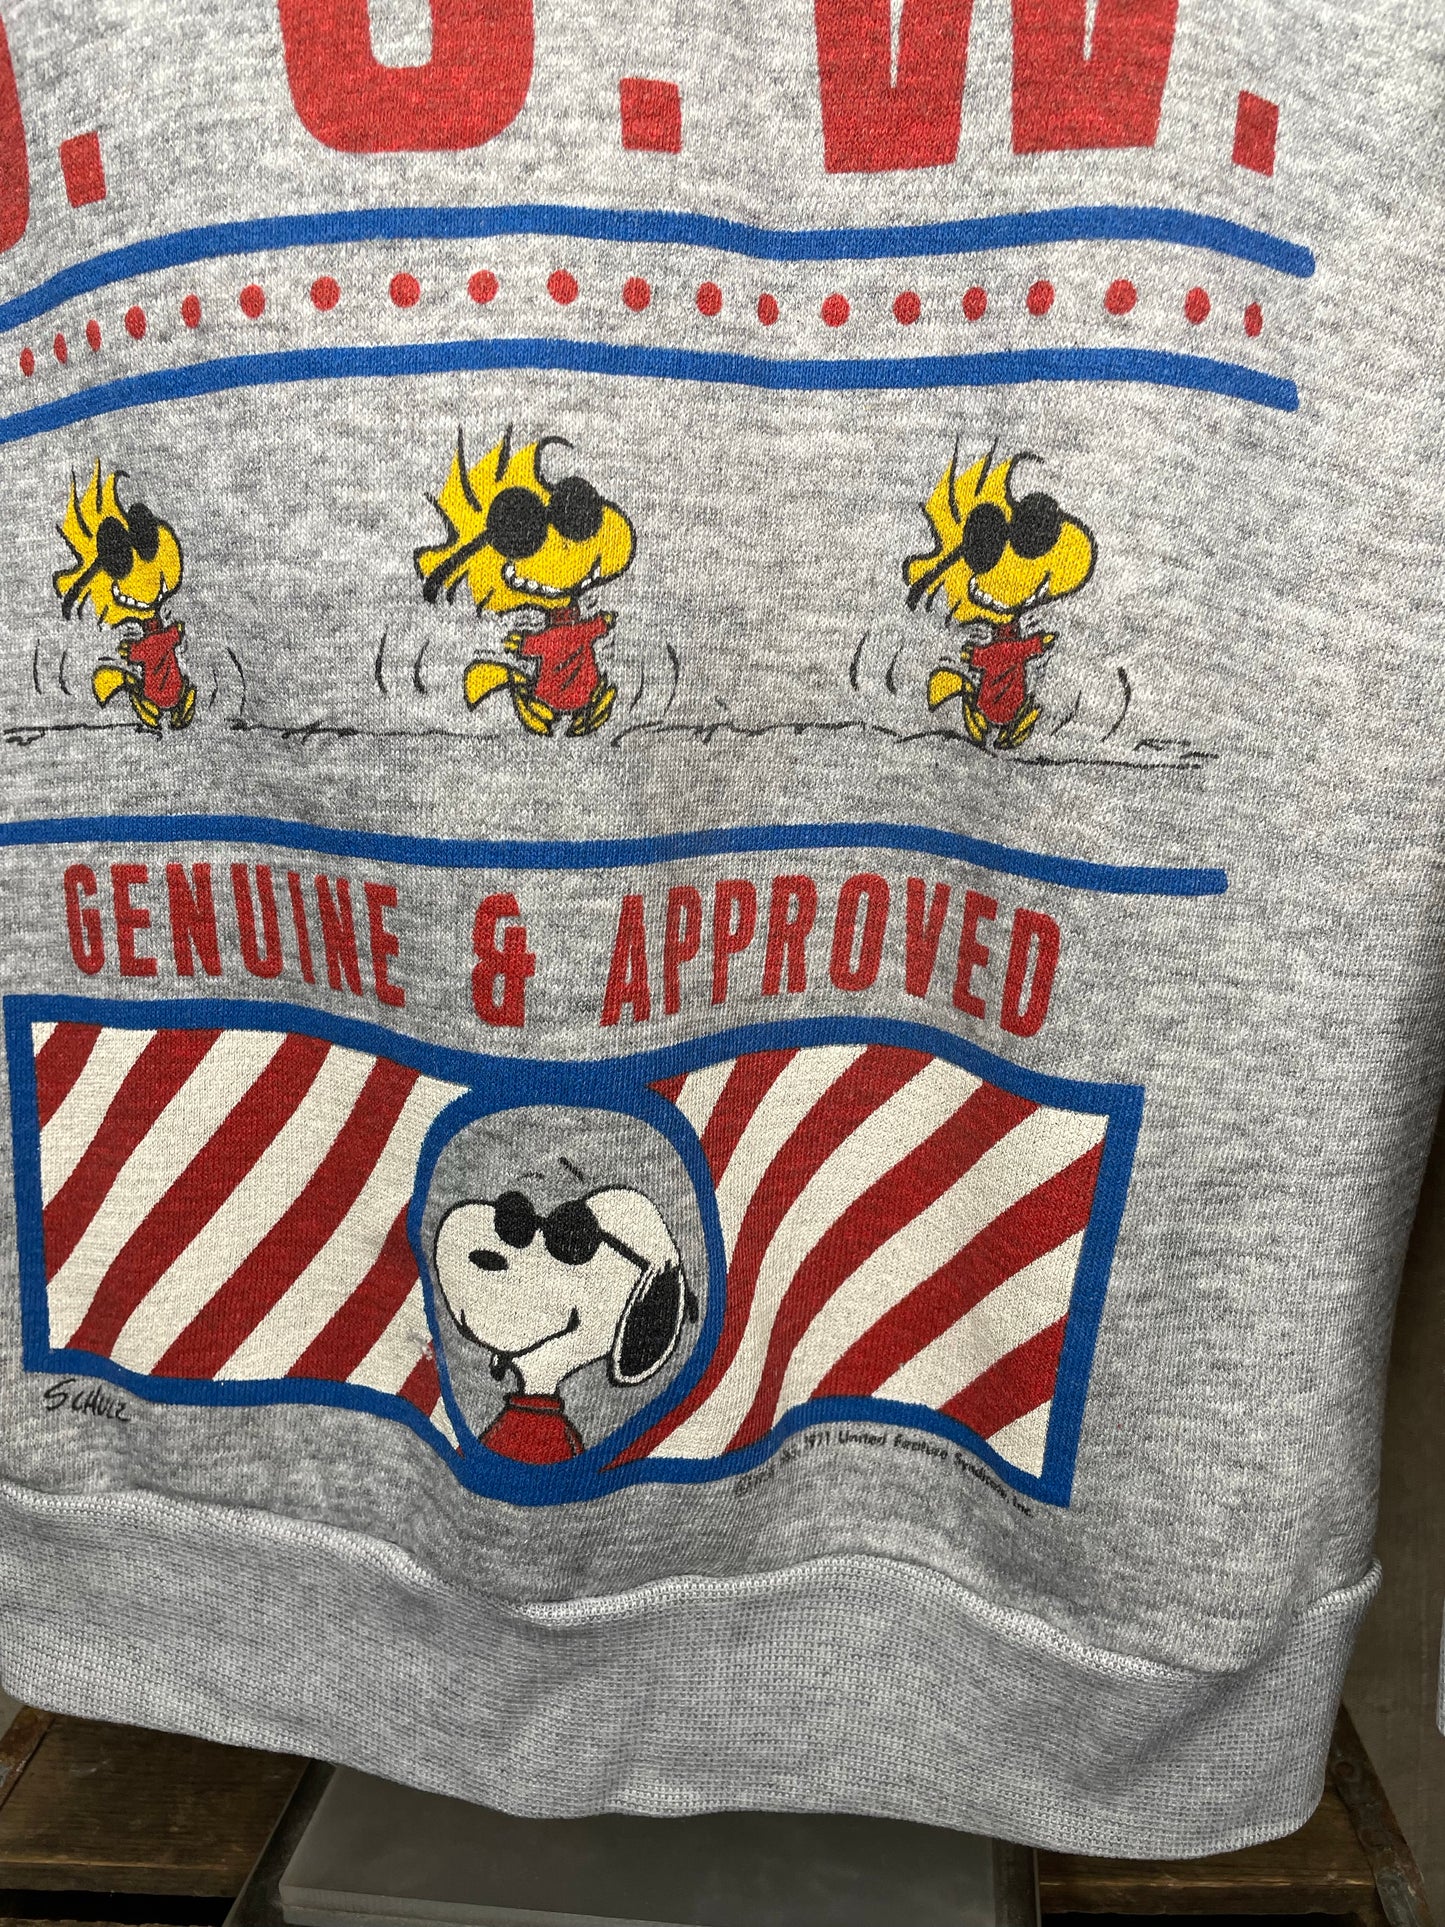 Vintage 70s 80s Snoopy Shirt Works Sweatshirt Sz XS